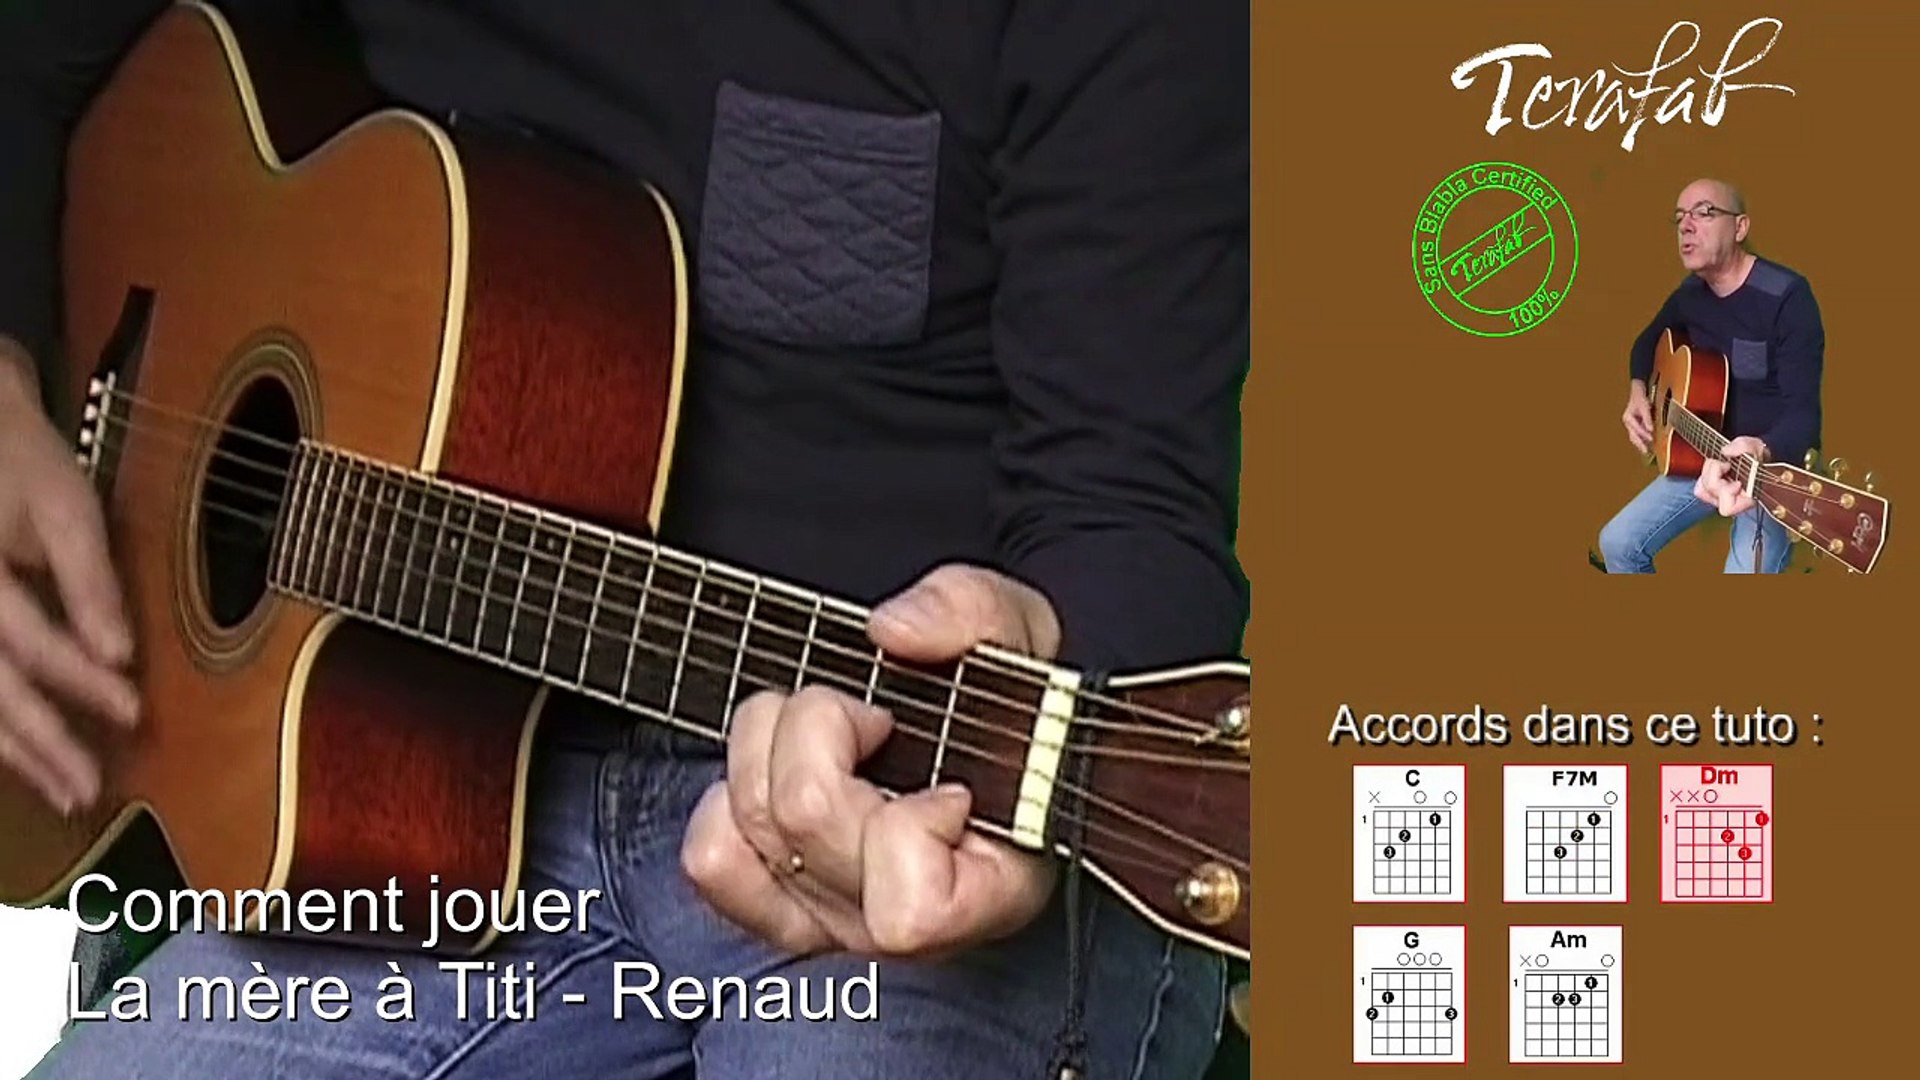 La mère à Titi - Renaud [Tuto guitare] by Terafab - Vidéo Dailymotion